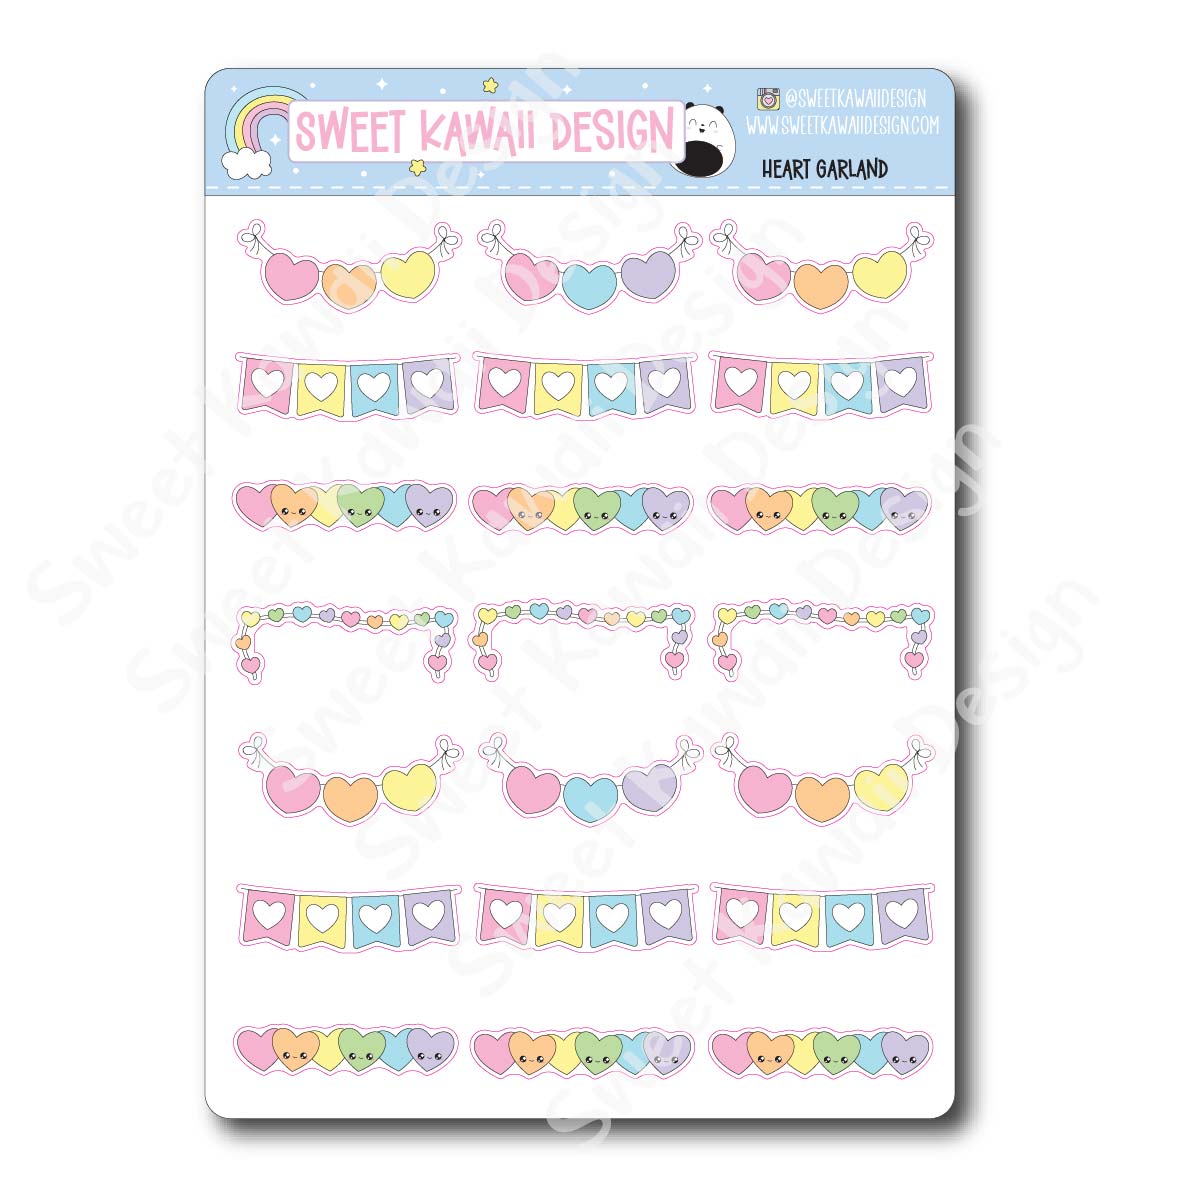 Kawaii Heart Garland Stickers